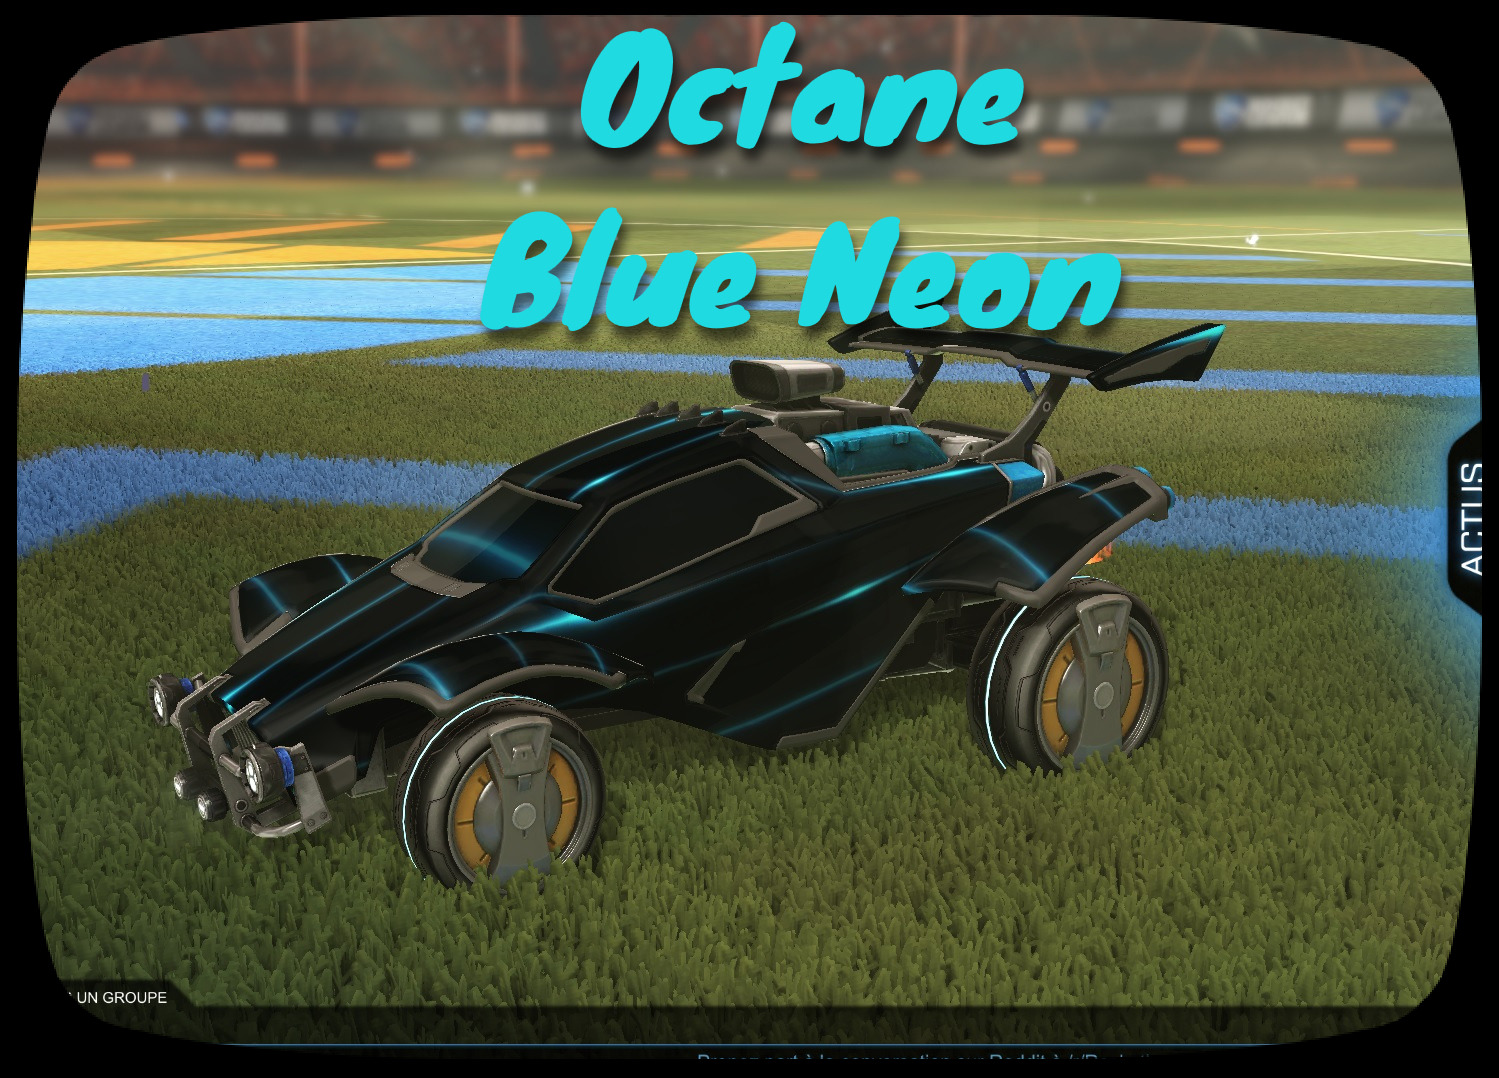 Octane Blue neon